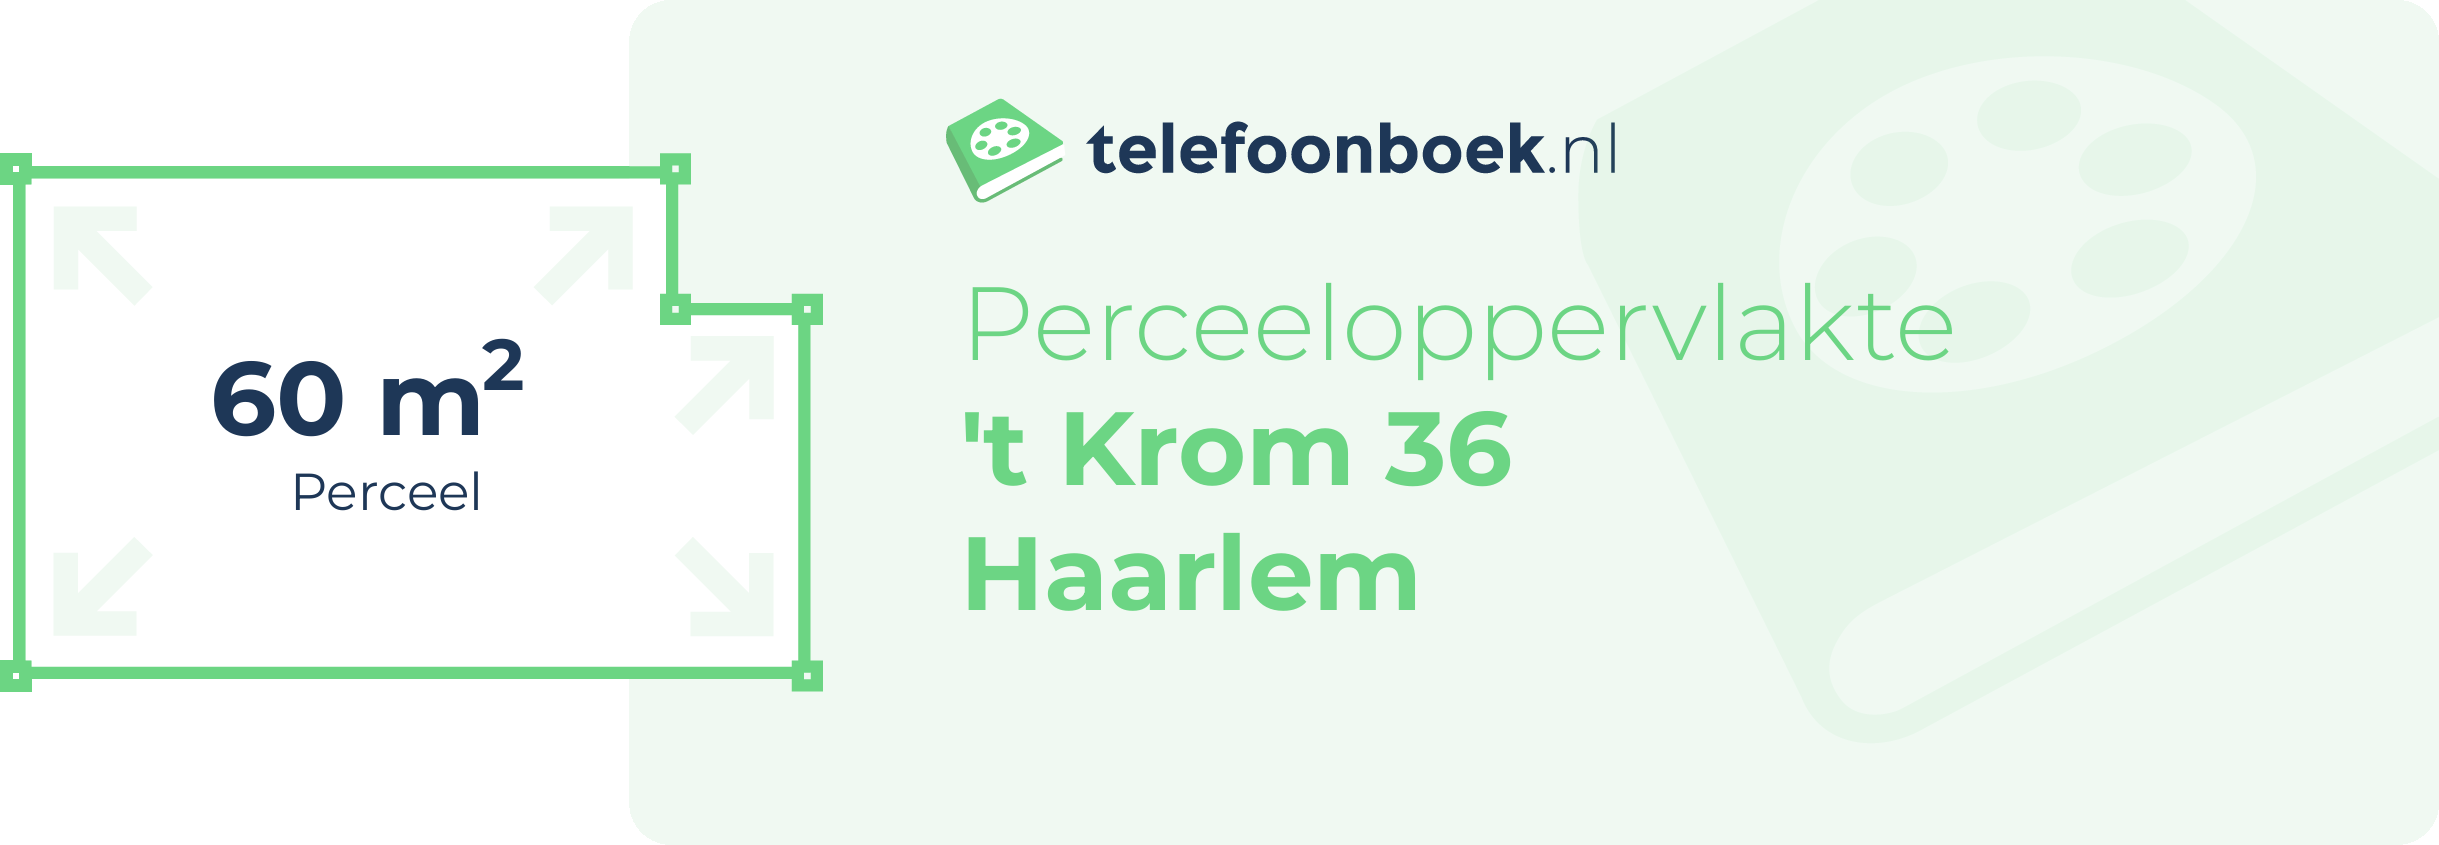 Perceeloppervlakte 't Krom 36 Haarlem